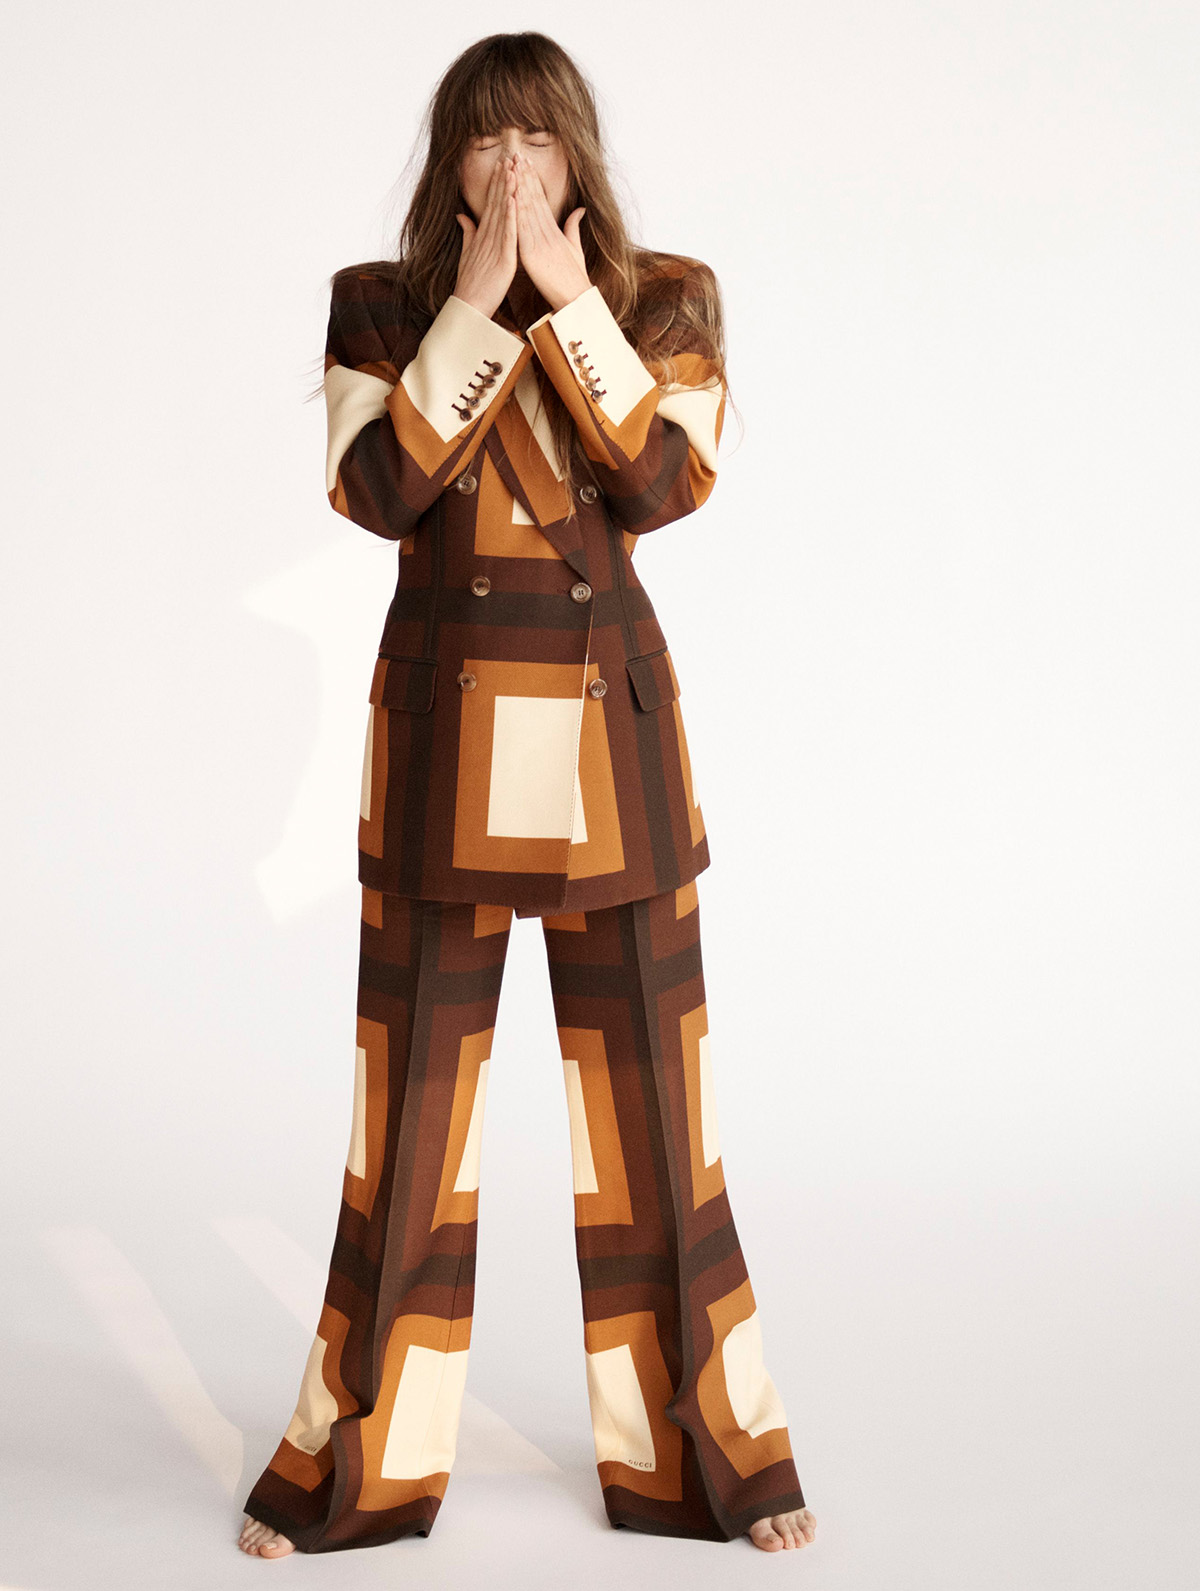 Dakota Johnson in Gucci on Elle UK February 2022 by Paola Kudacki